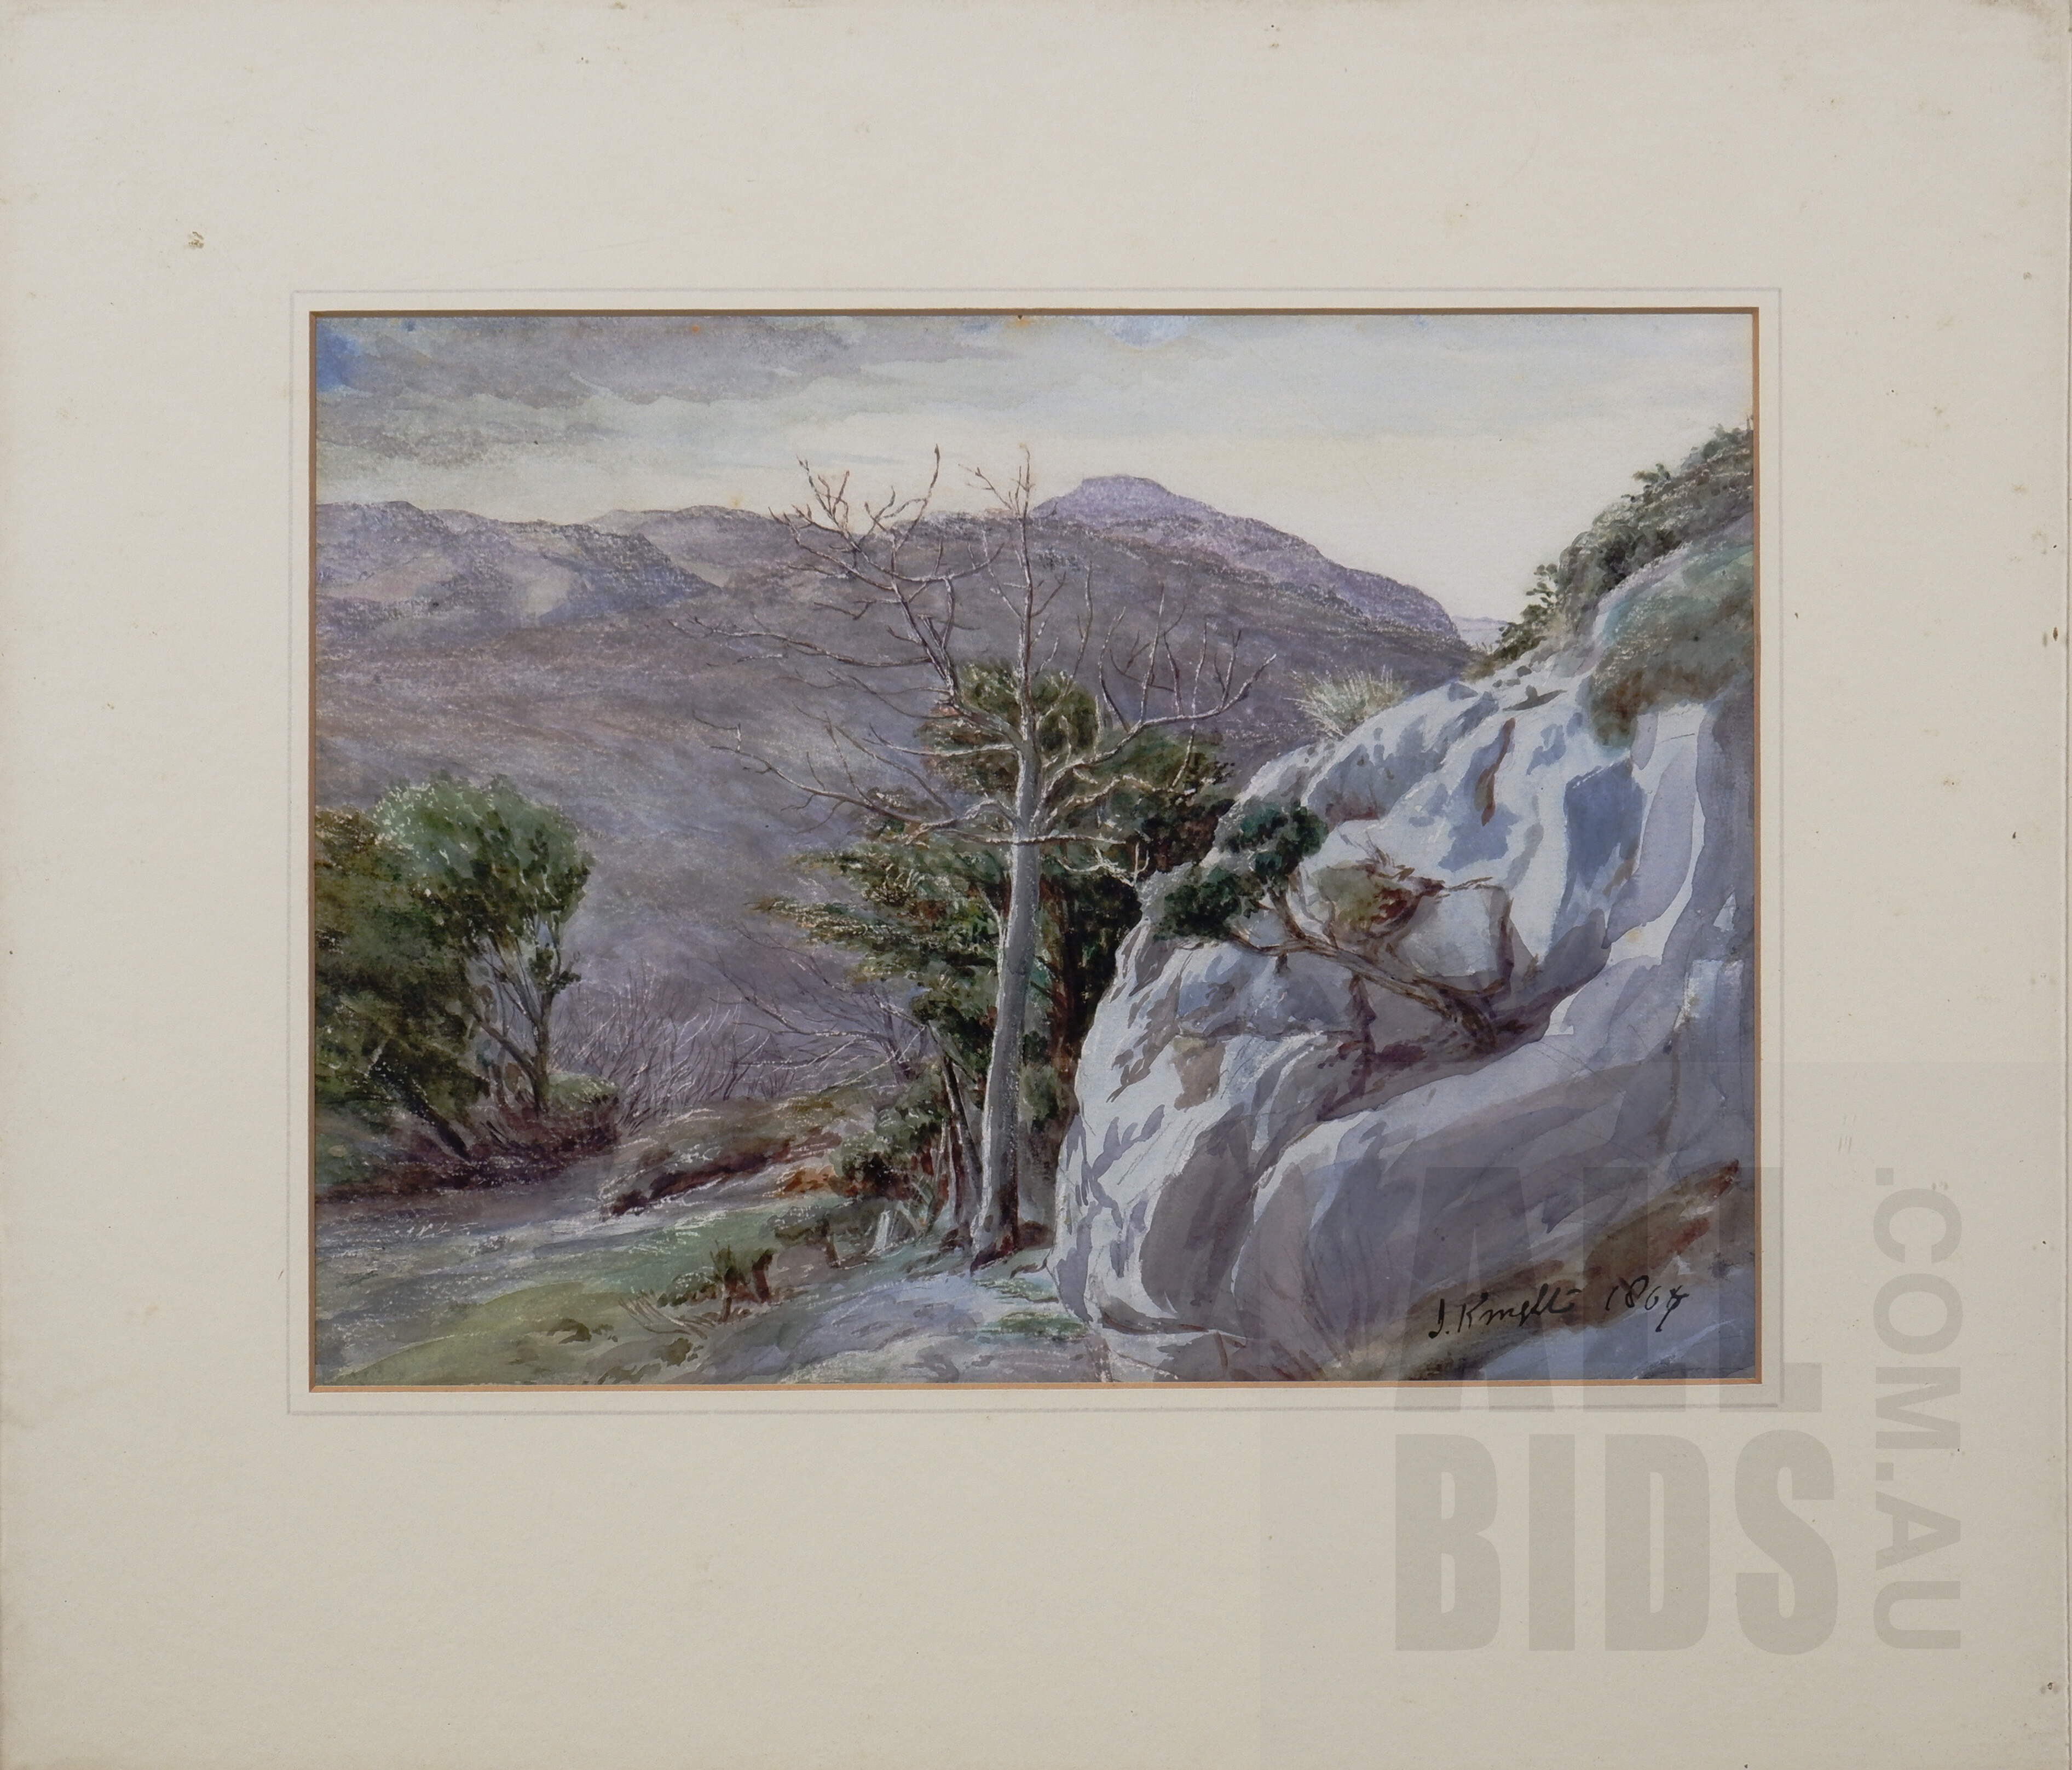 'Joseph Knight (British, 1837-1909), A Rocky Mountainous Landscape 1867, pencil and wash, 25 x 33.5cm'